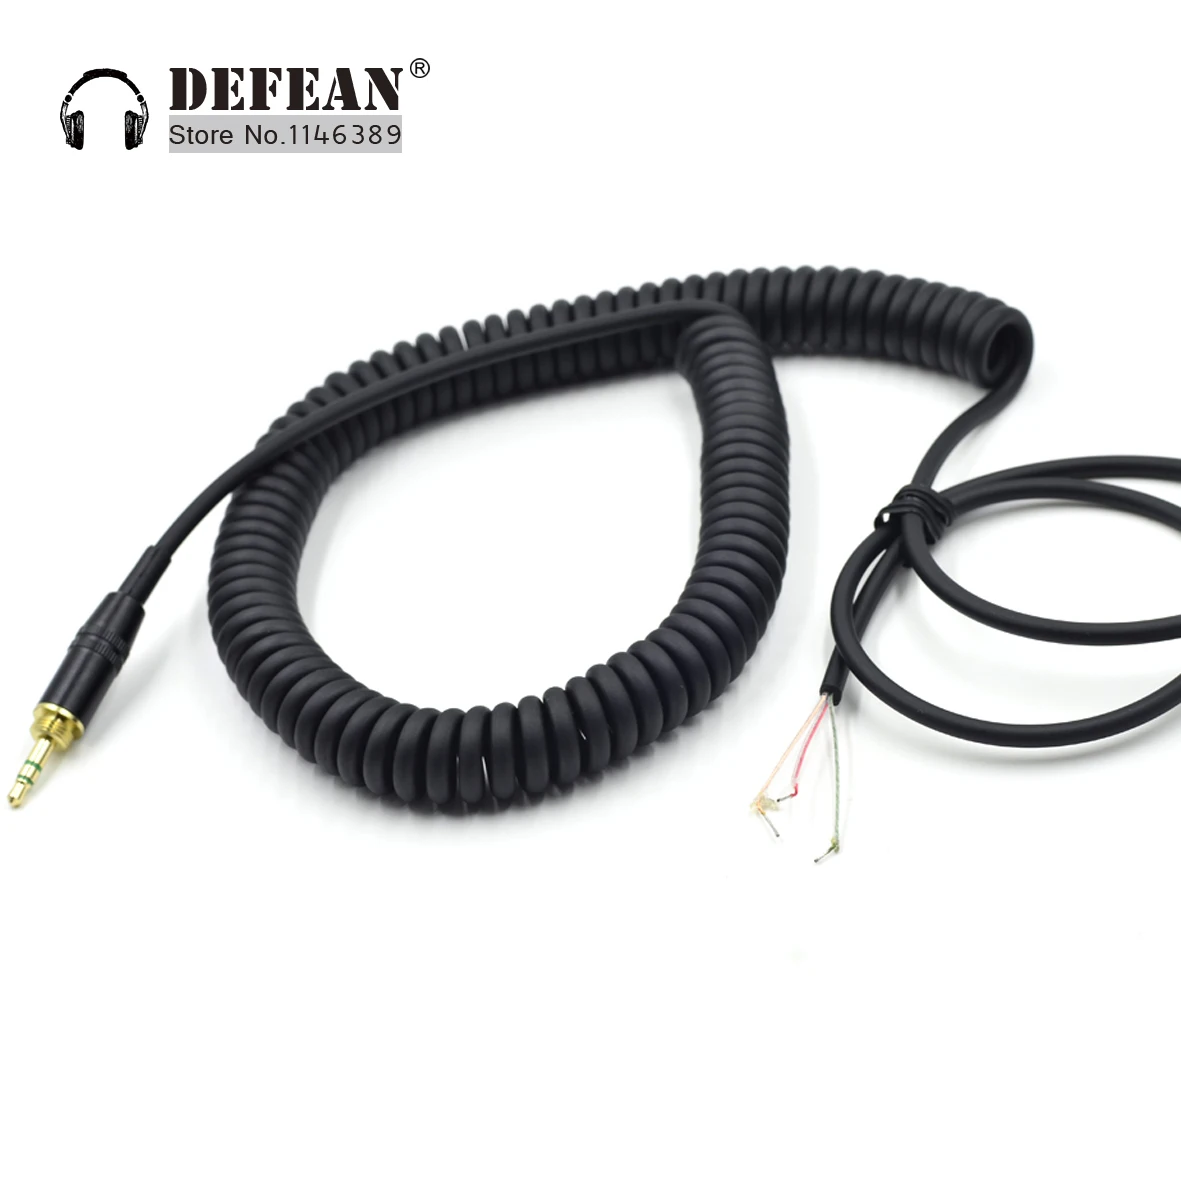 Dj Cable Cord Line Plug For Technics Rp-dh1200 Dj1200 Sony Zx500